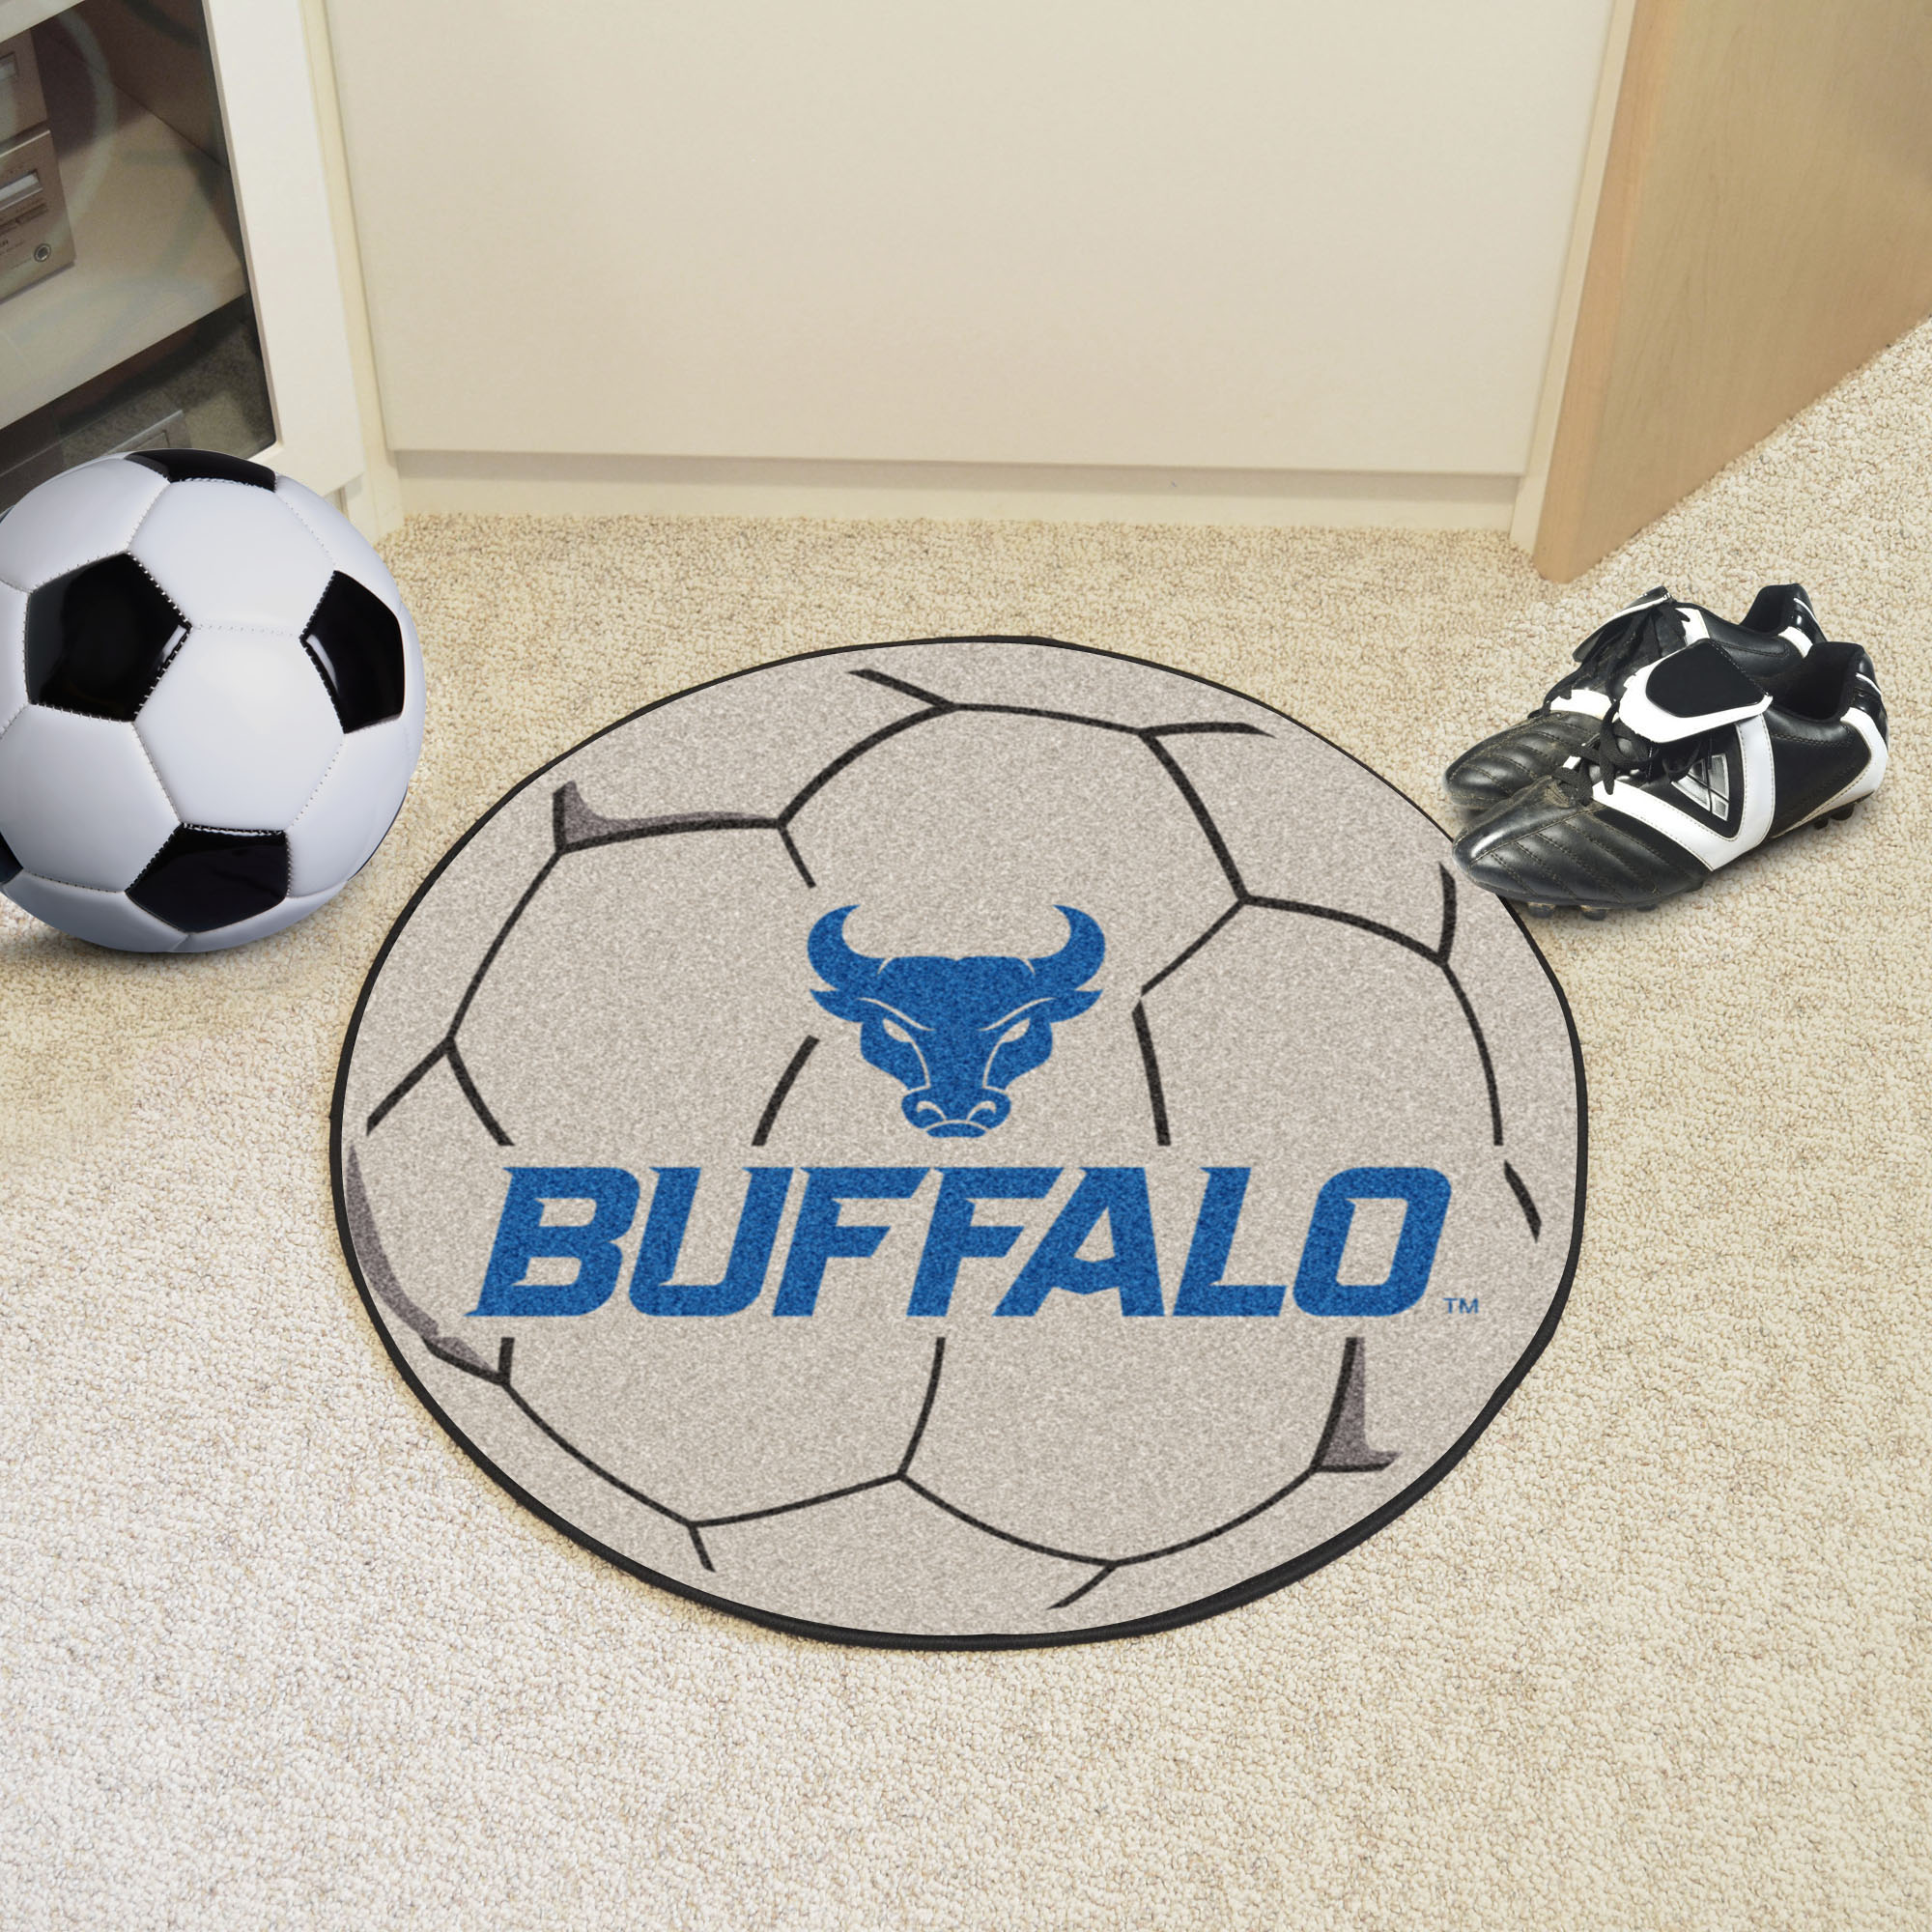 University of Buffalo Ball Shaped Area Rugs (Ball Shaped Area Rugs: Soccer Ball)